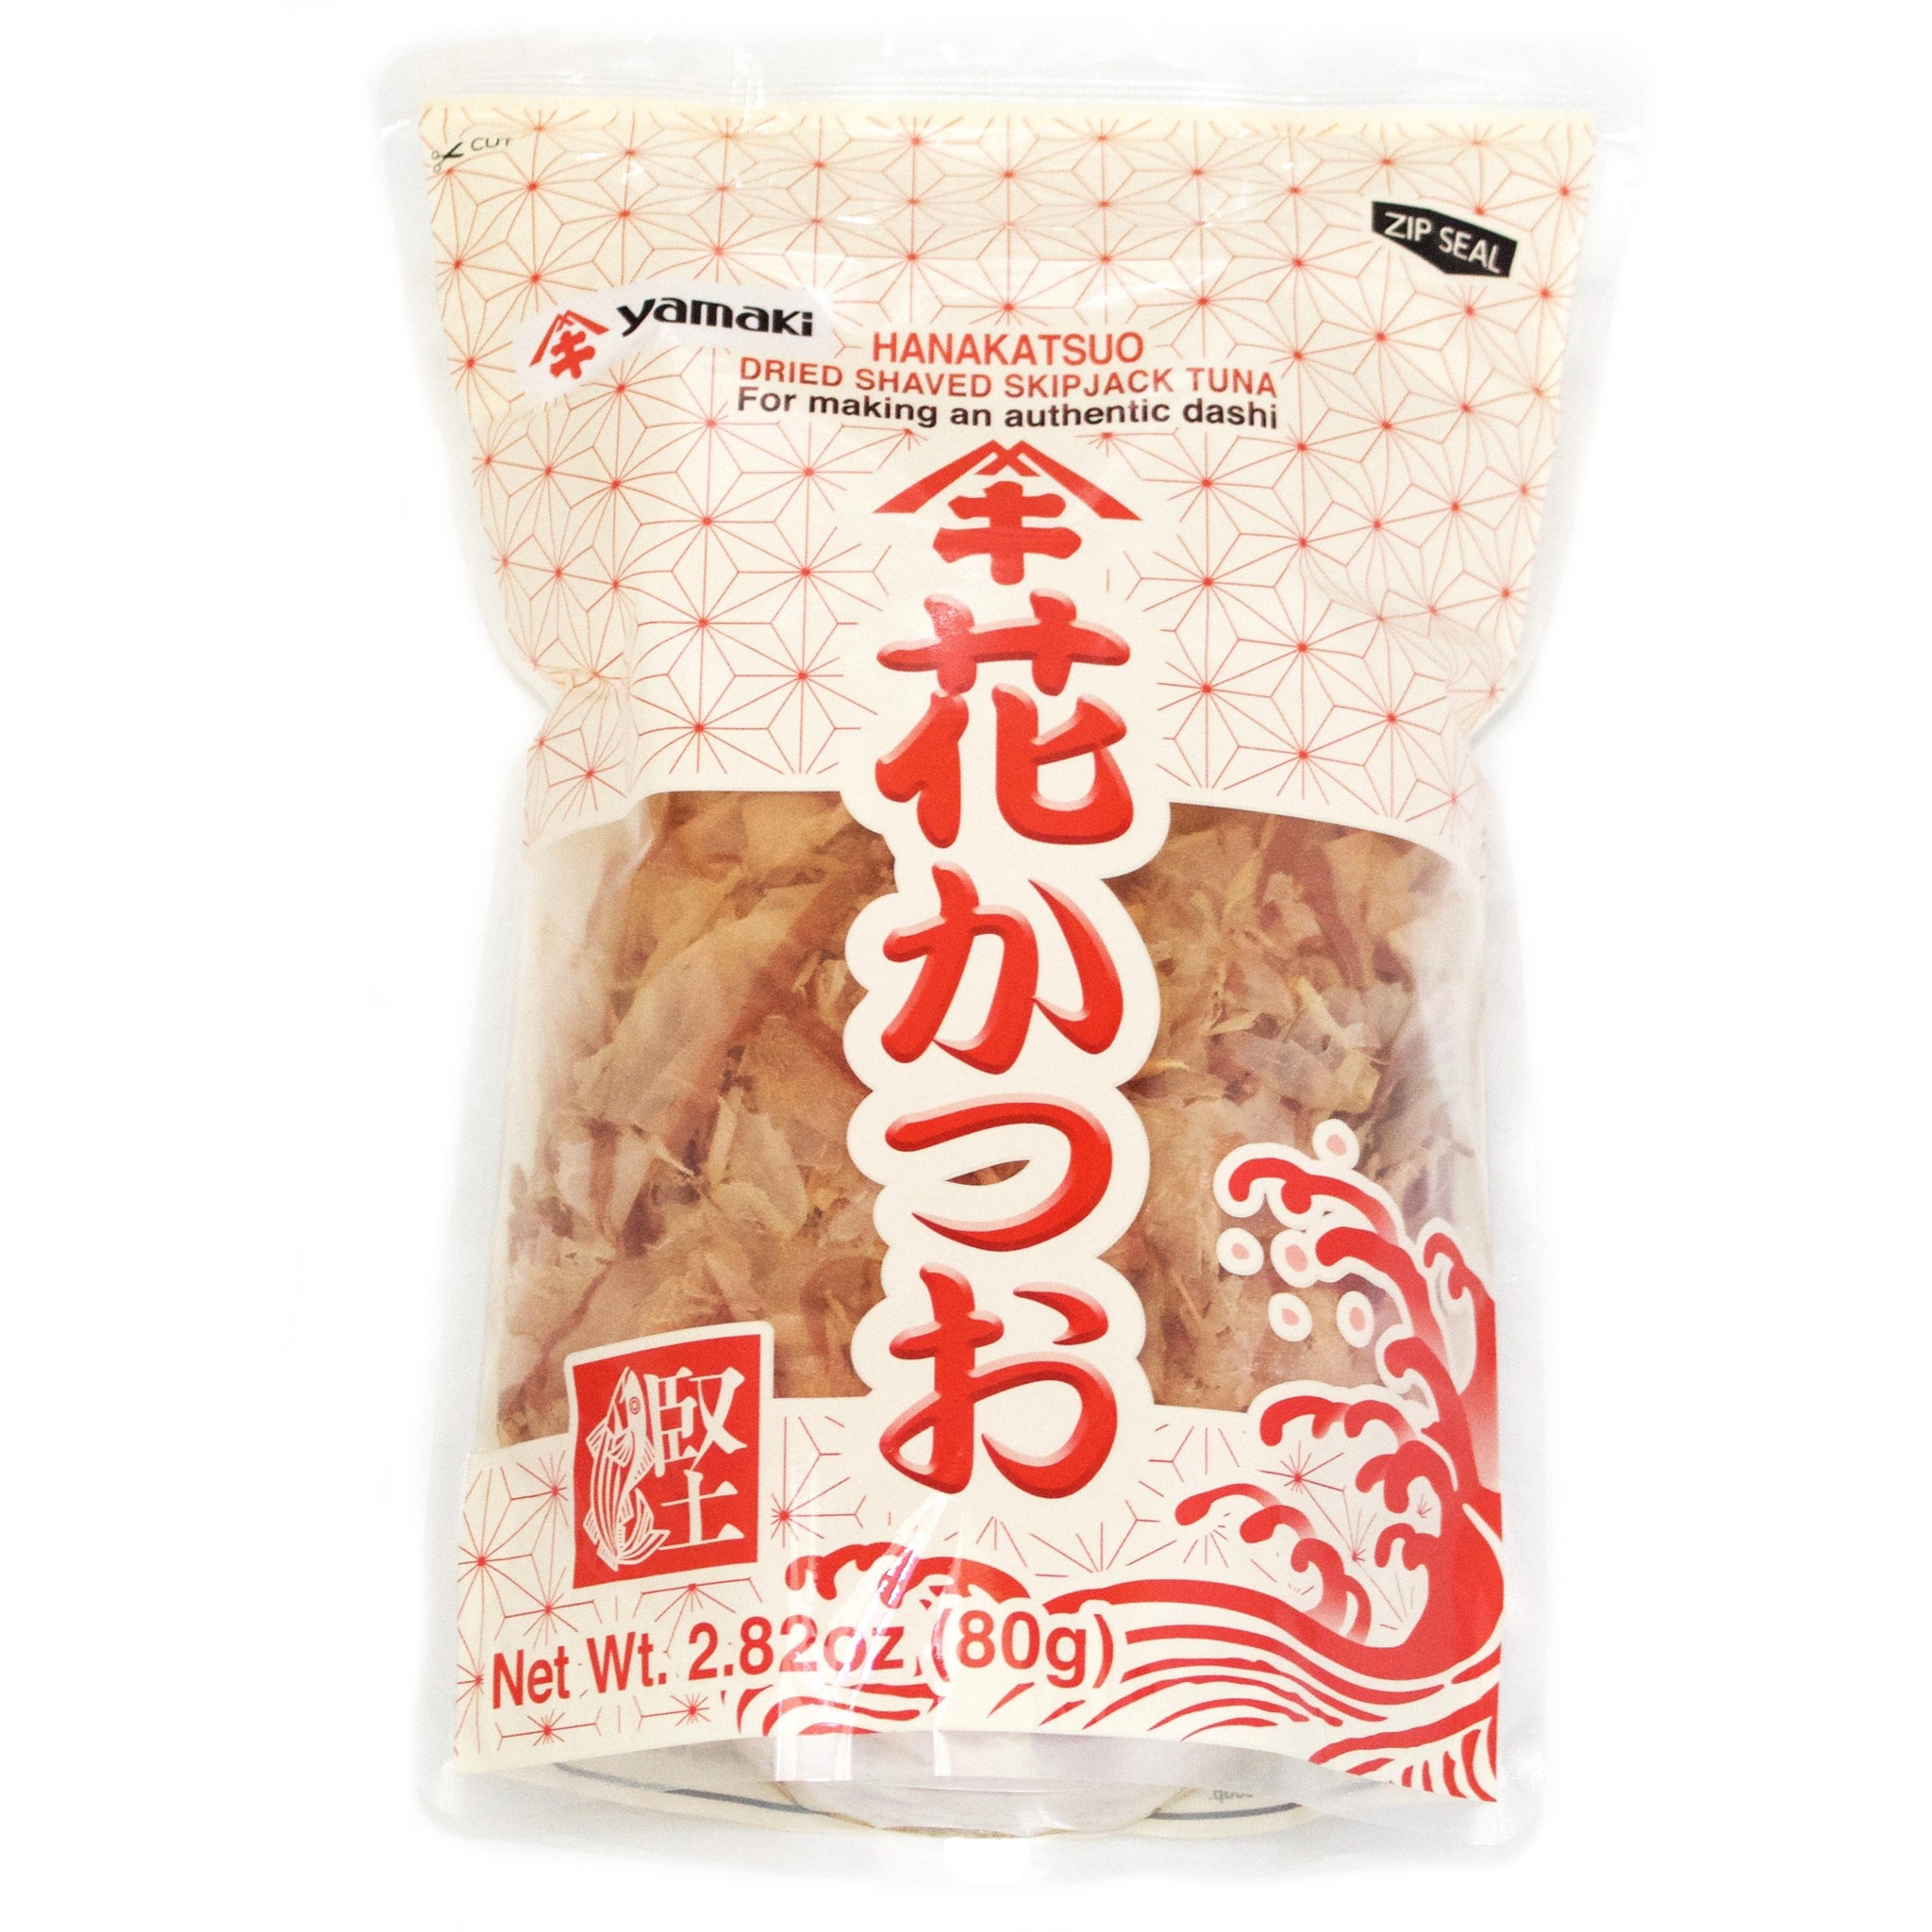 Hanakatsuo Dried Bonito Flakes by Yamaki – TOIRO